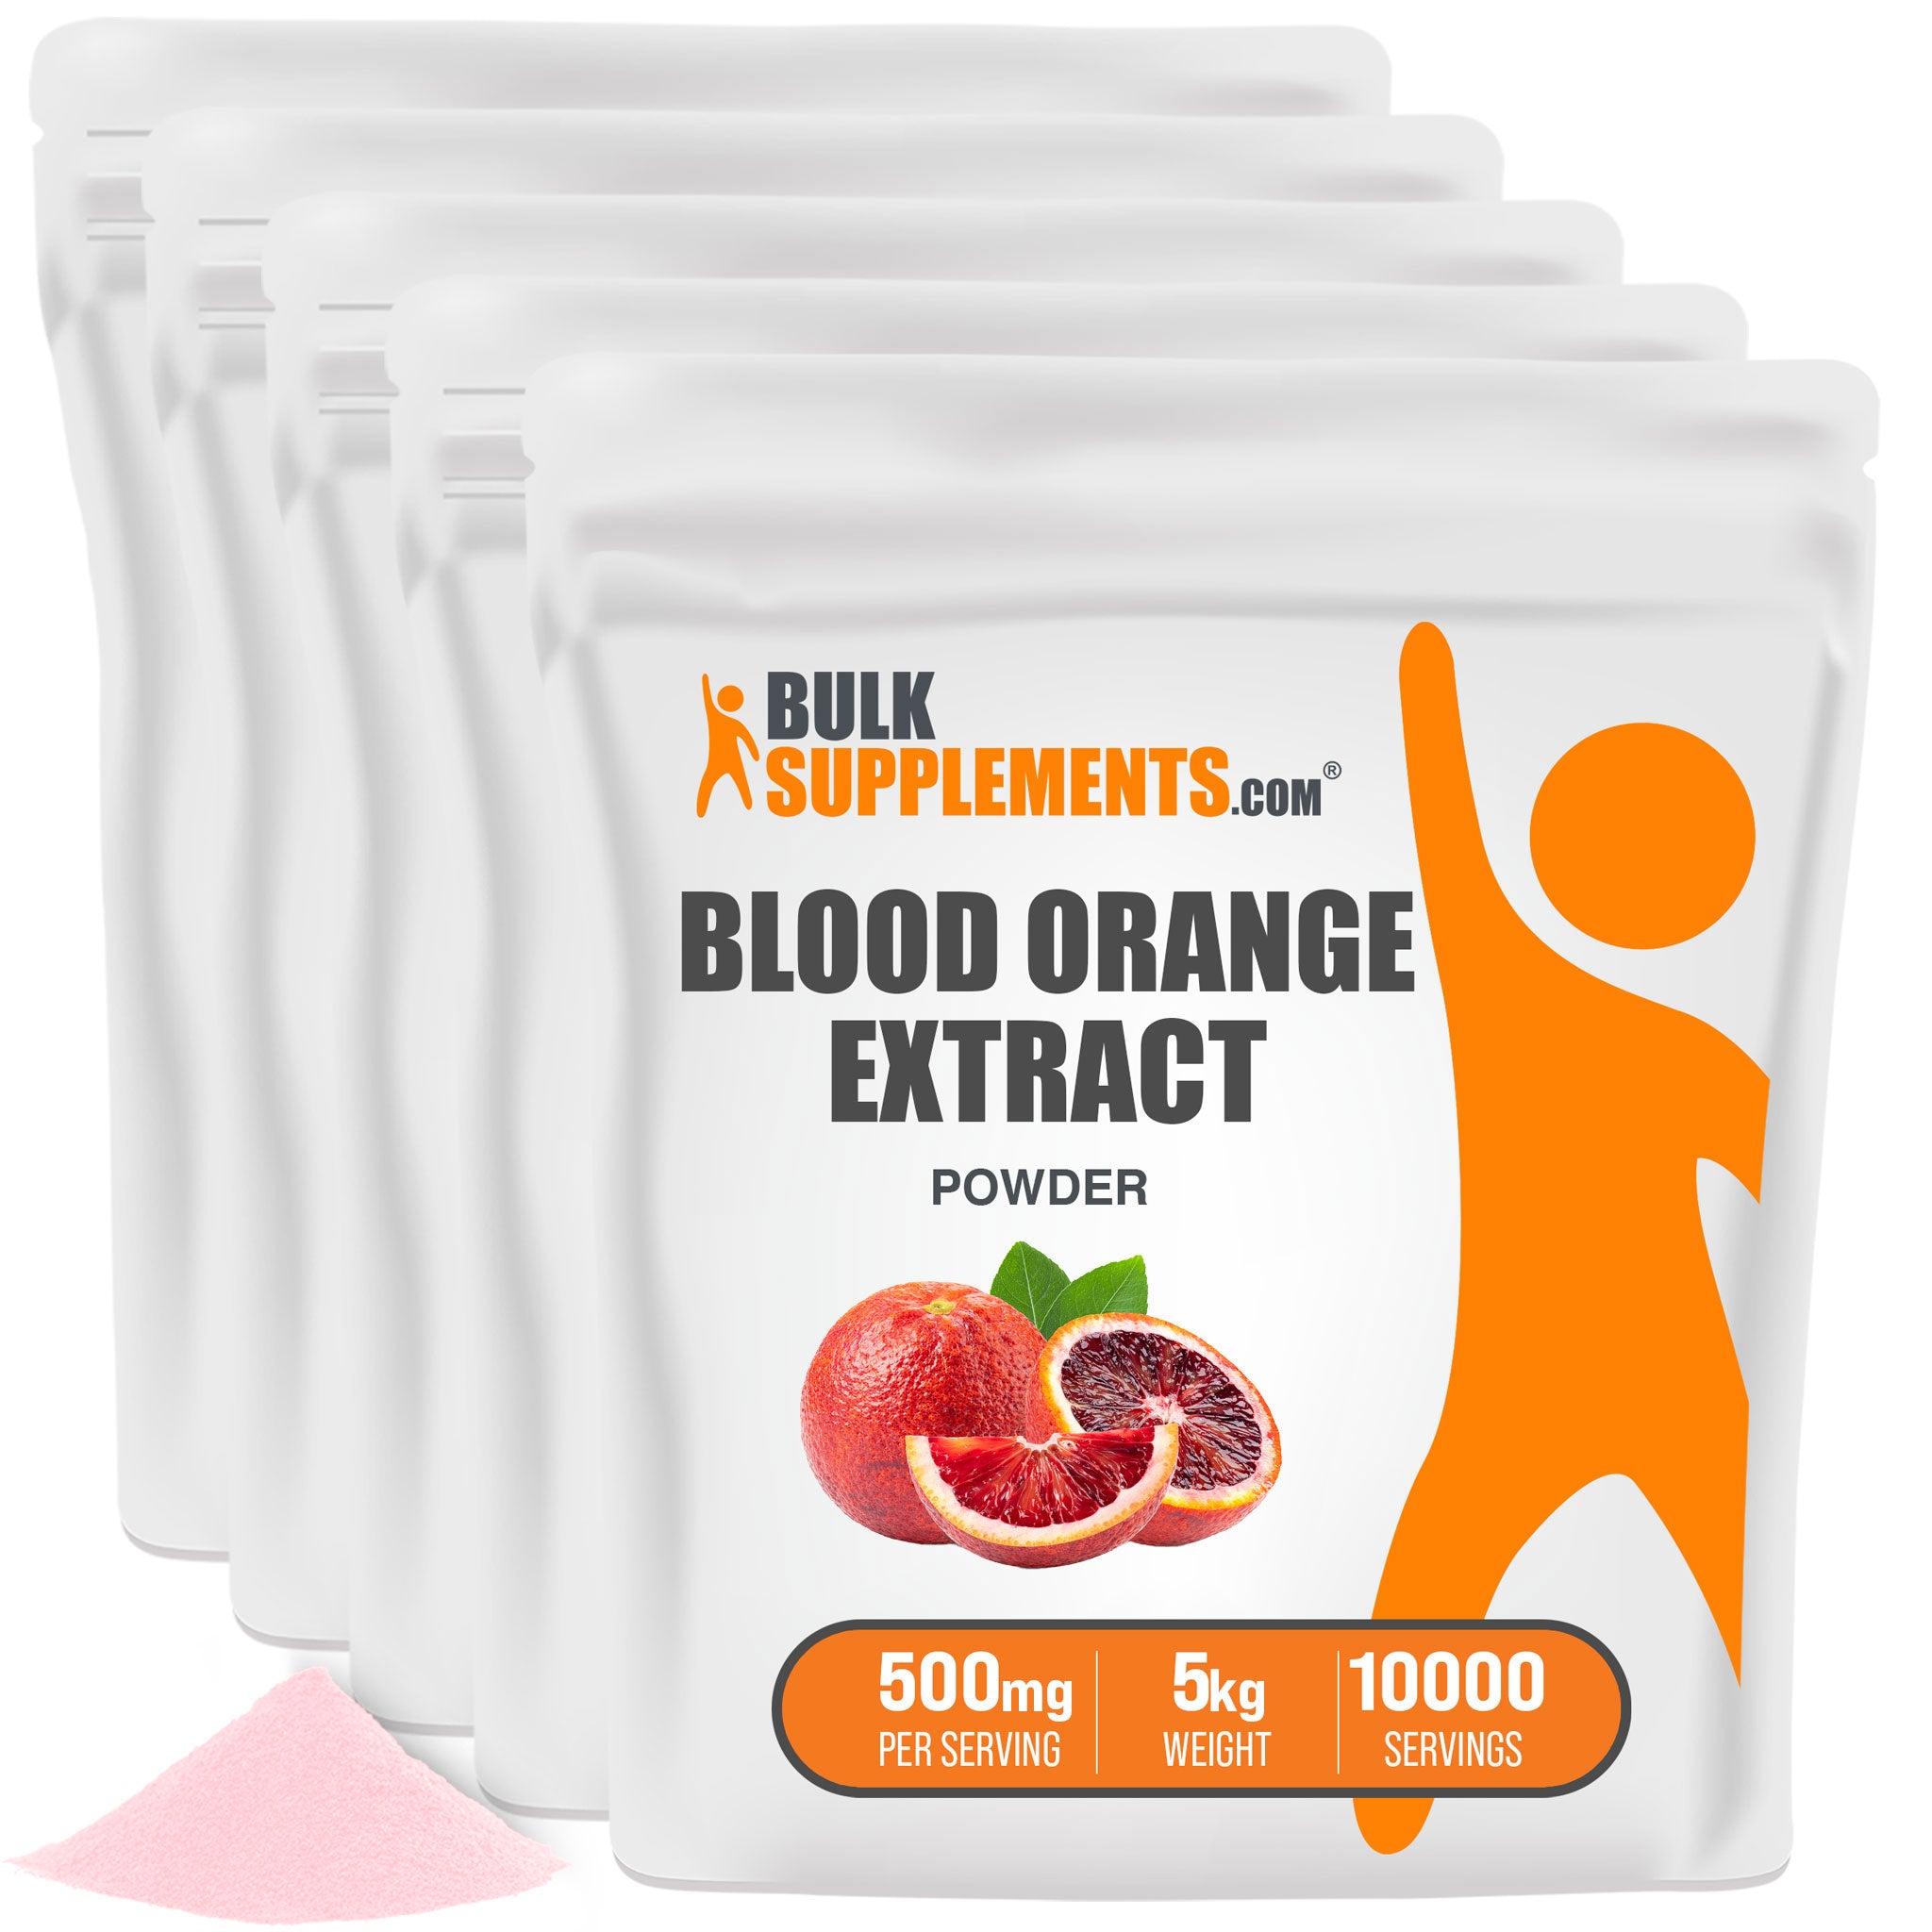 BulkSupplements Blood Orange Extract Powder 5 Kilograms set of 5 bags